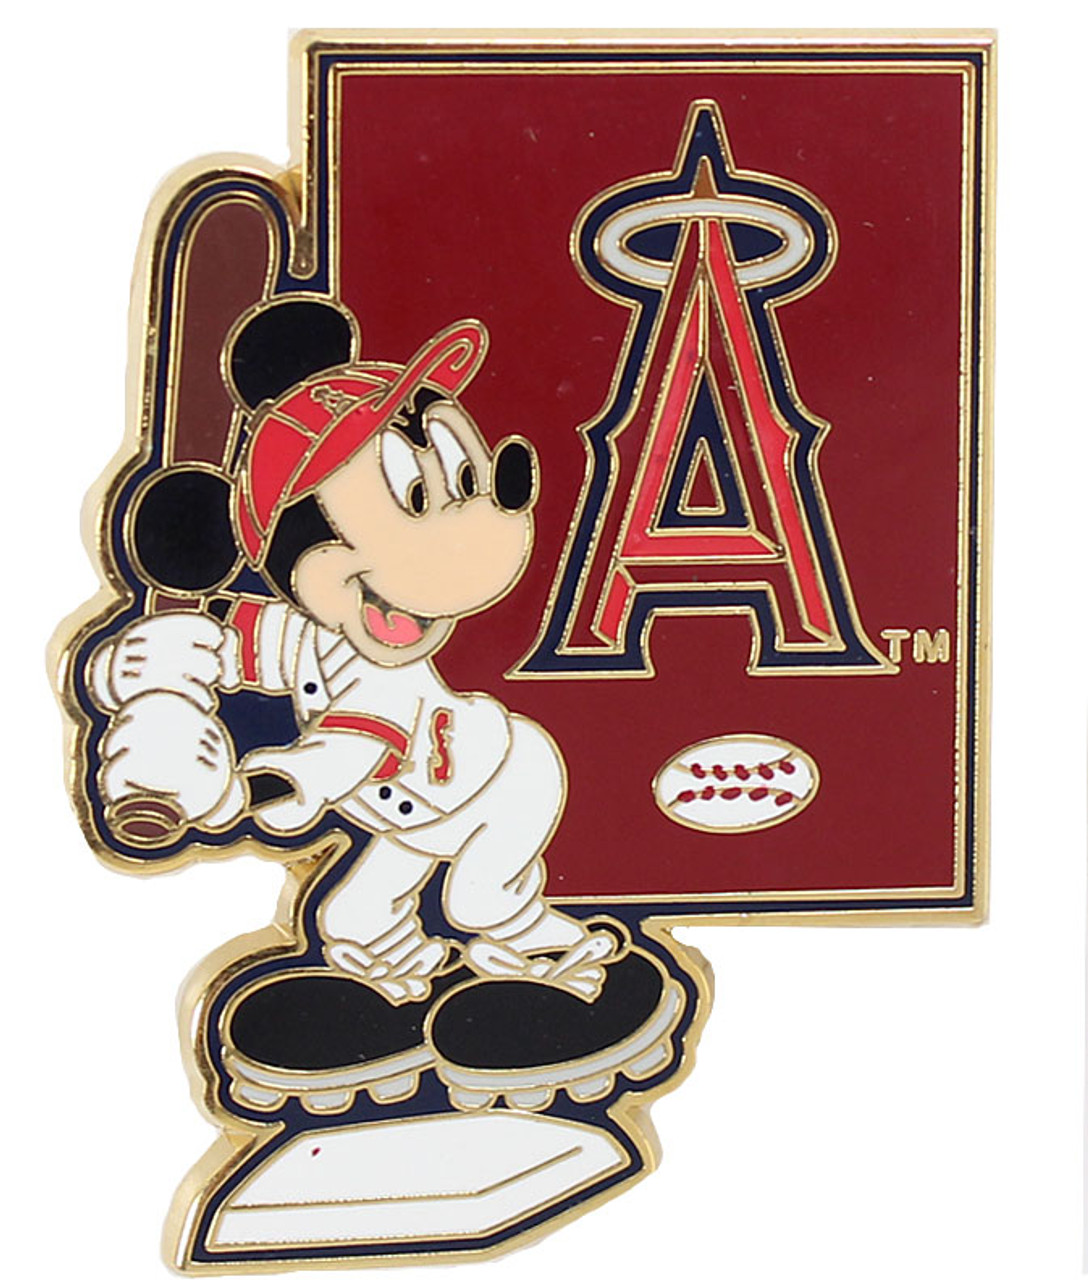 Los Angeles Dodgers World Series Mickey Mouse Disney Baseball Shirt